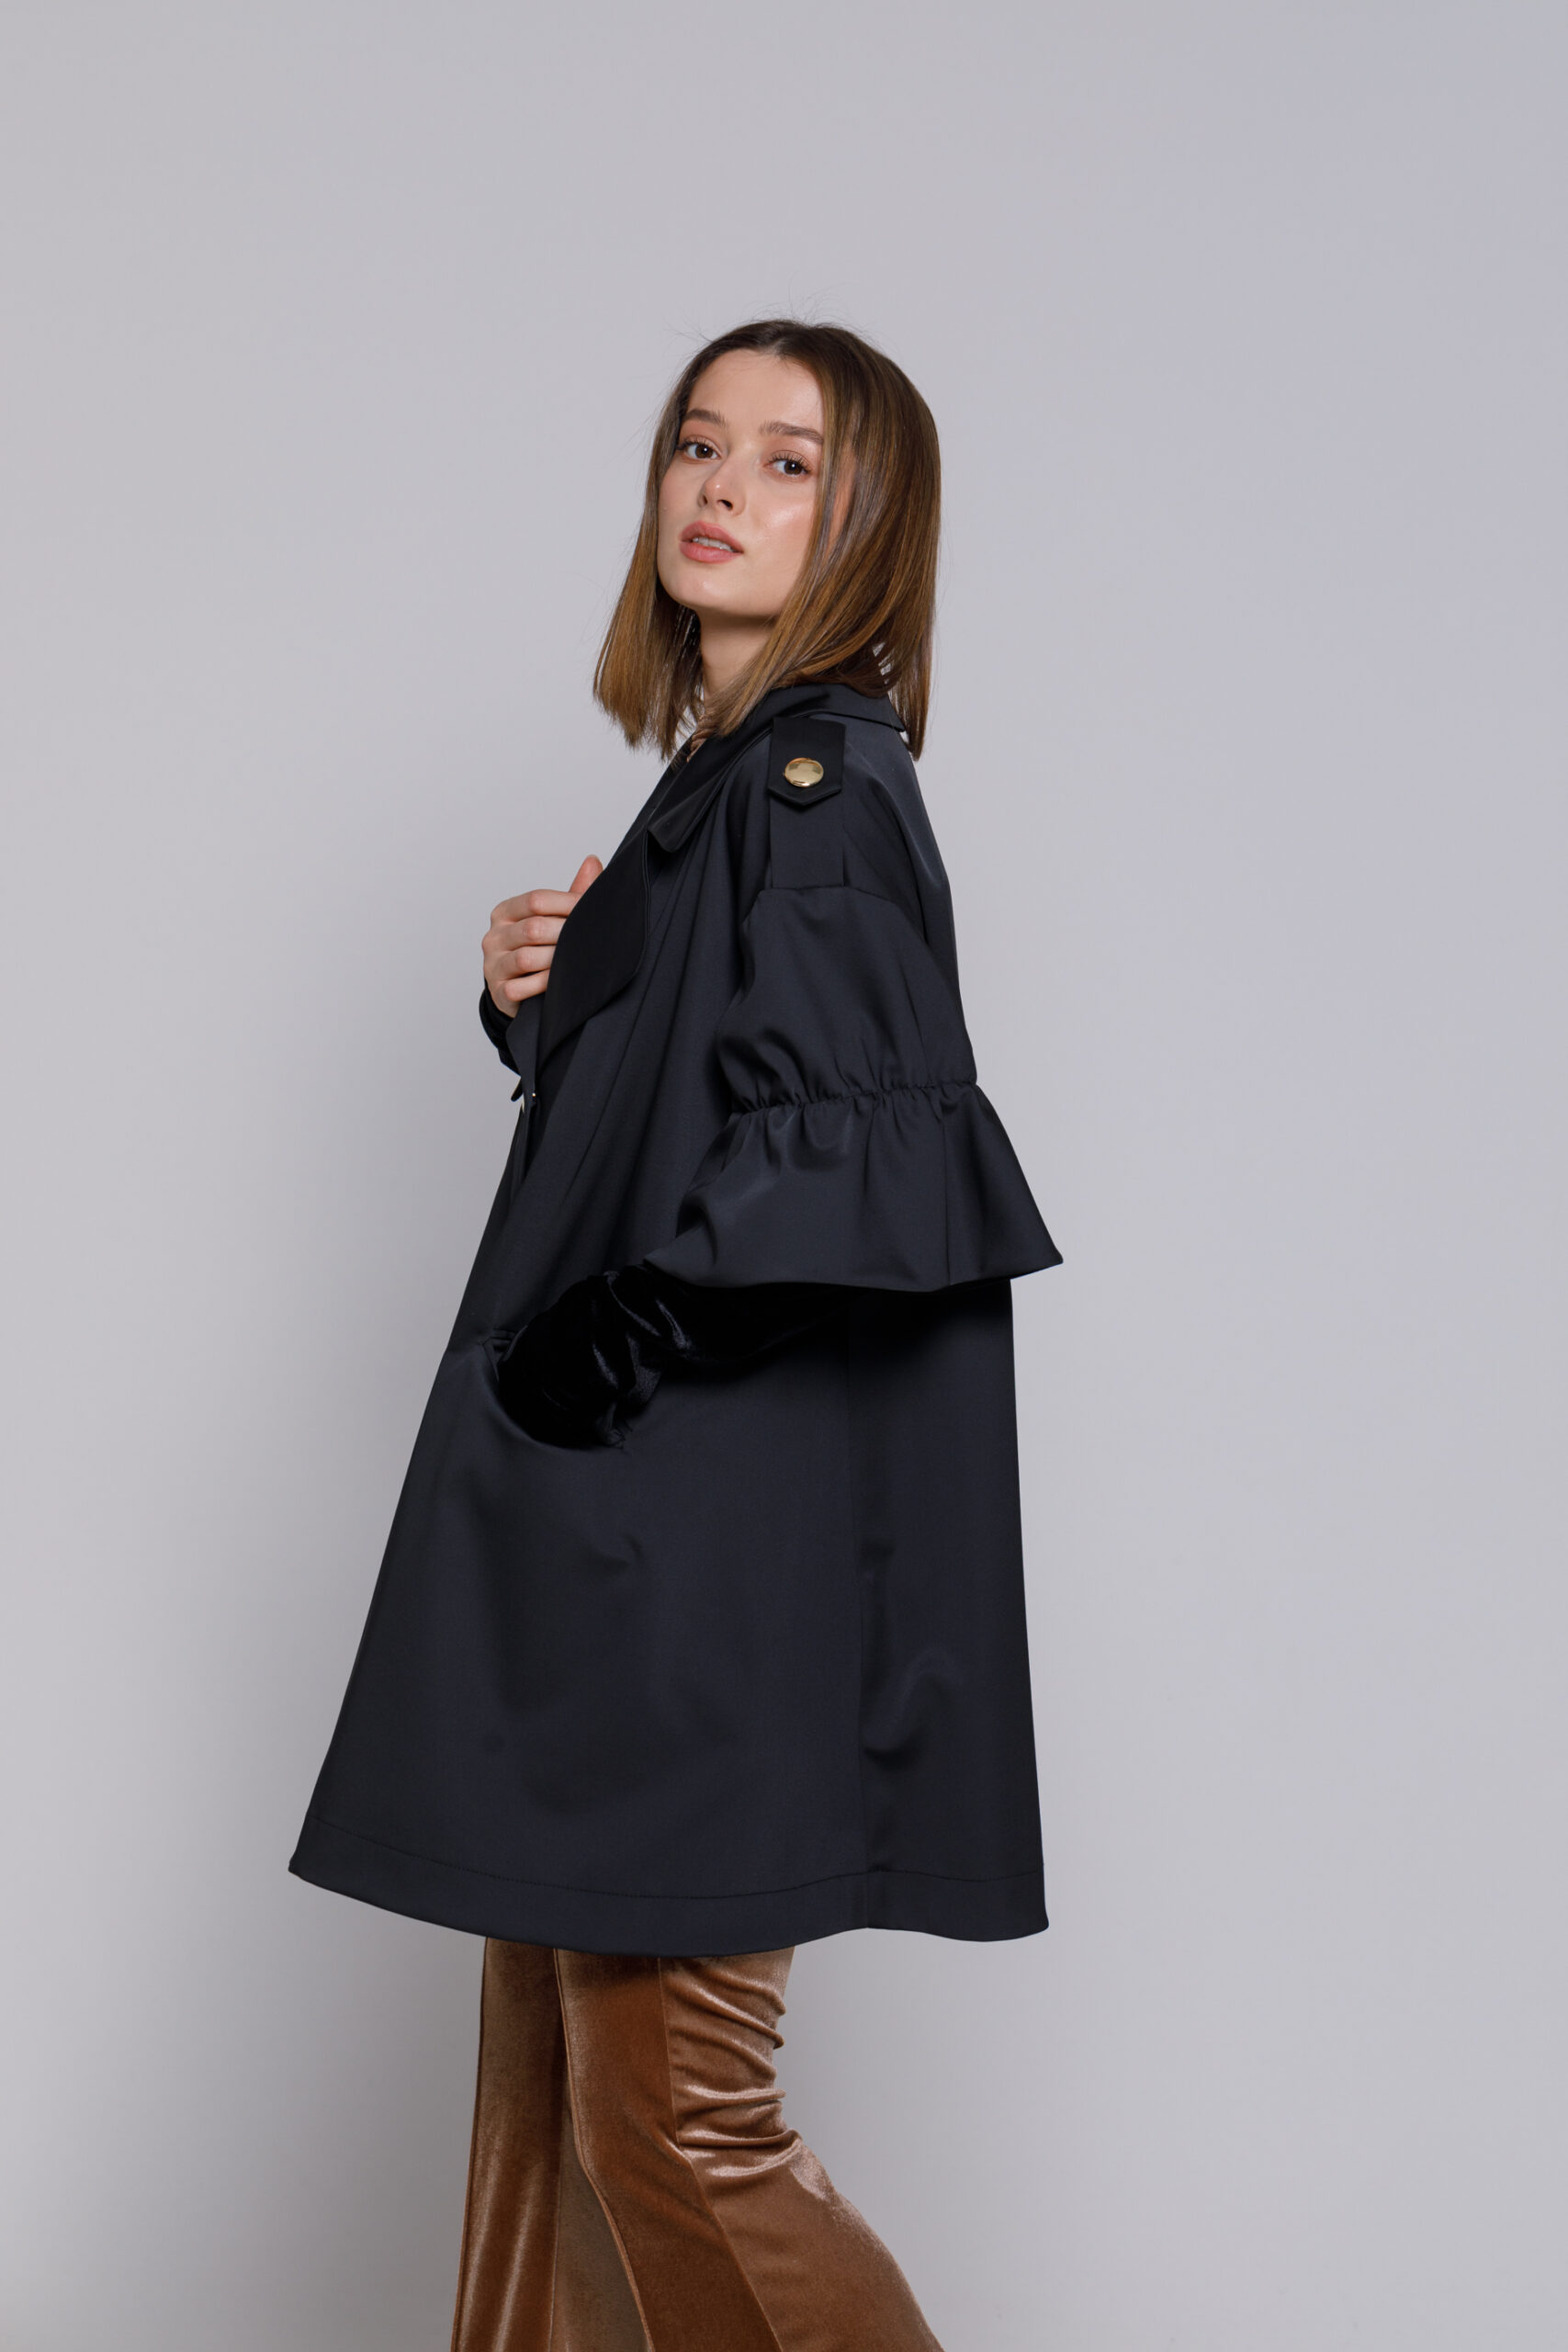 Jacheta CALLIOPE neagra cu volanase pe maneca. Materiale naturale, design unicat, cu broderie si aplicatii handmade